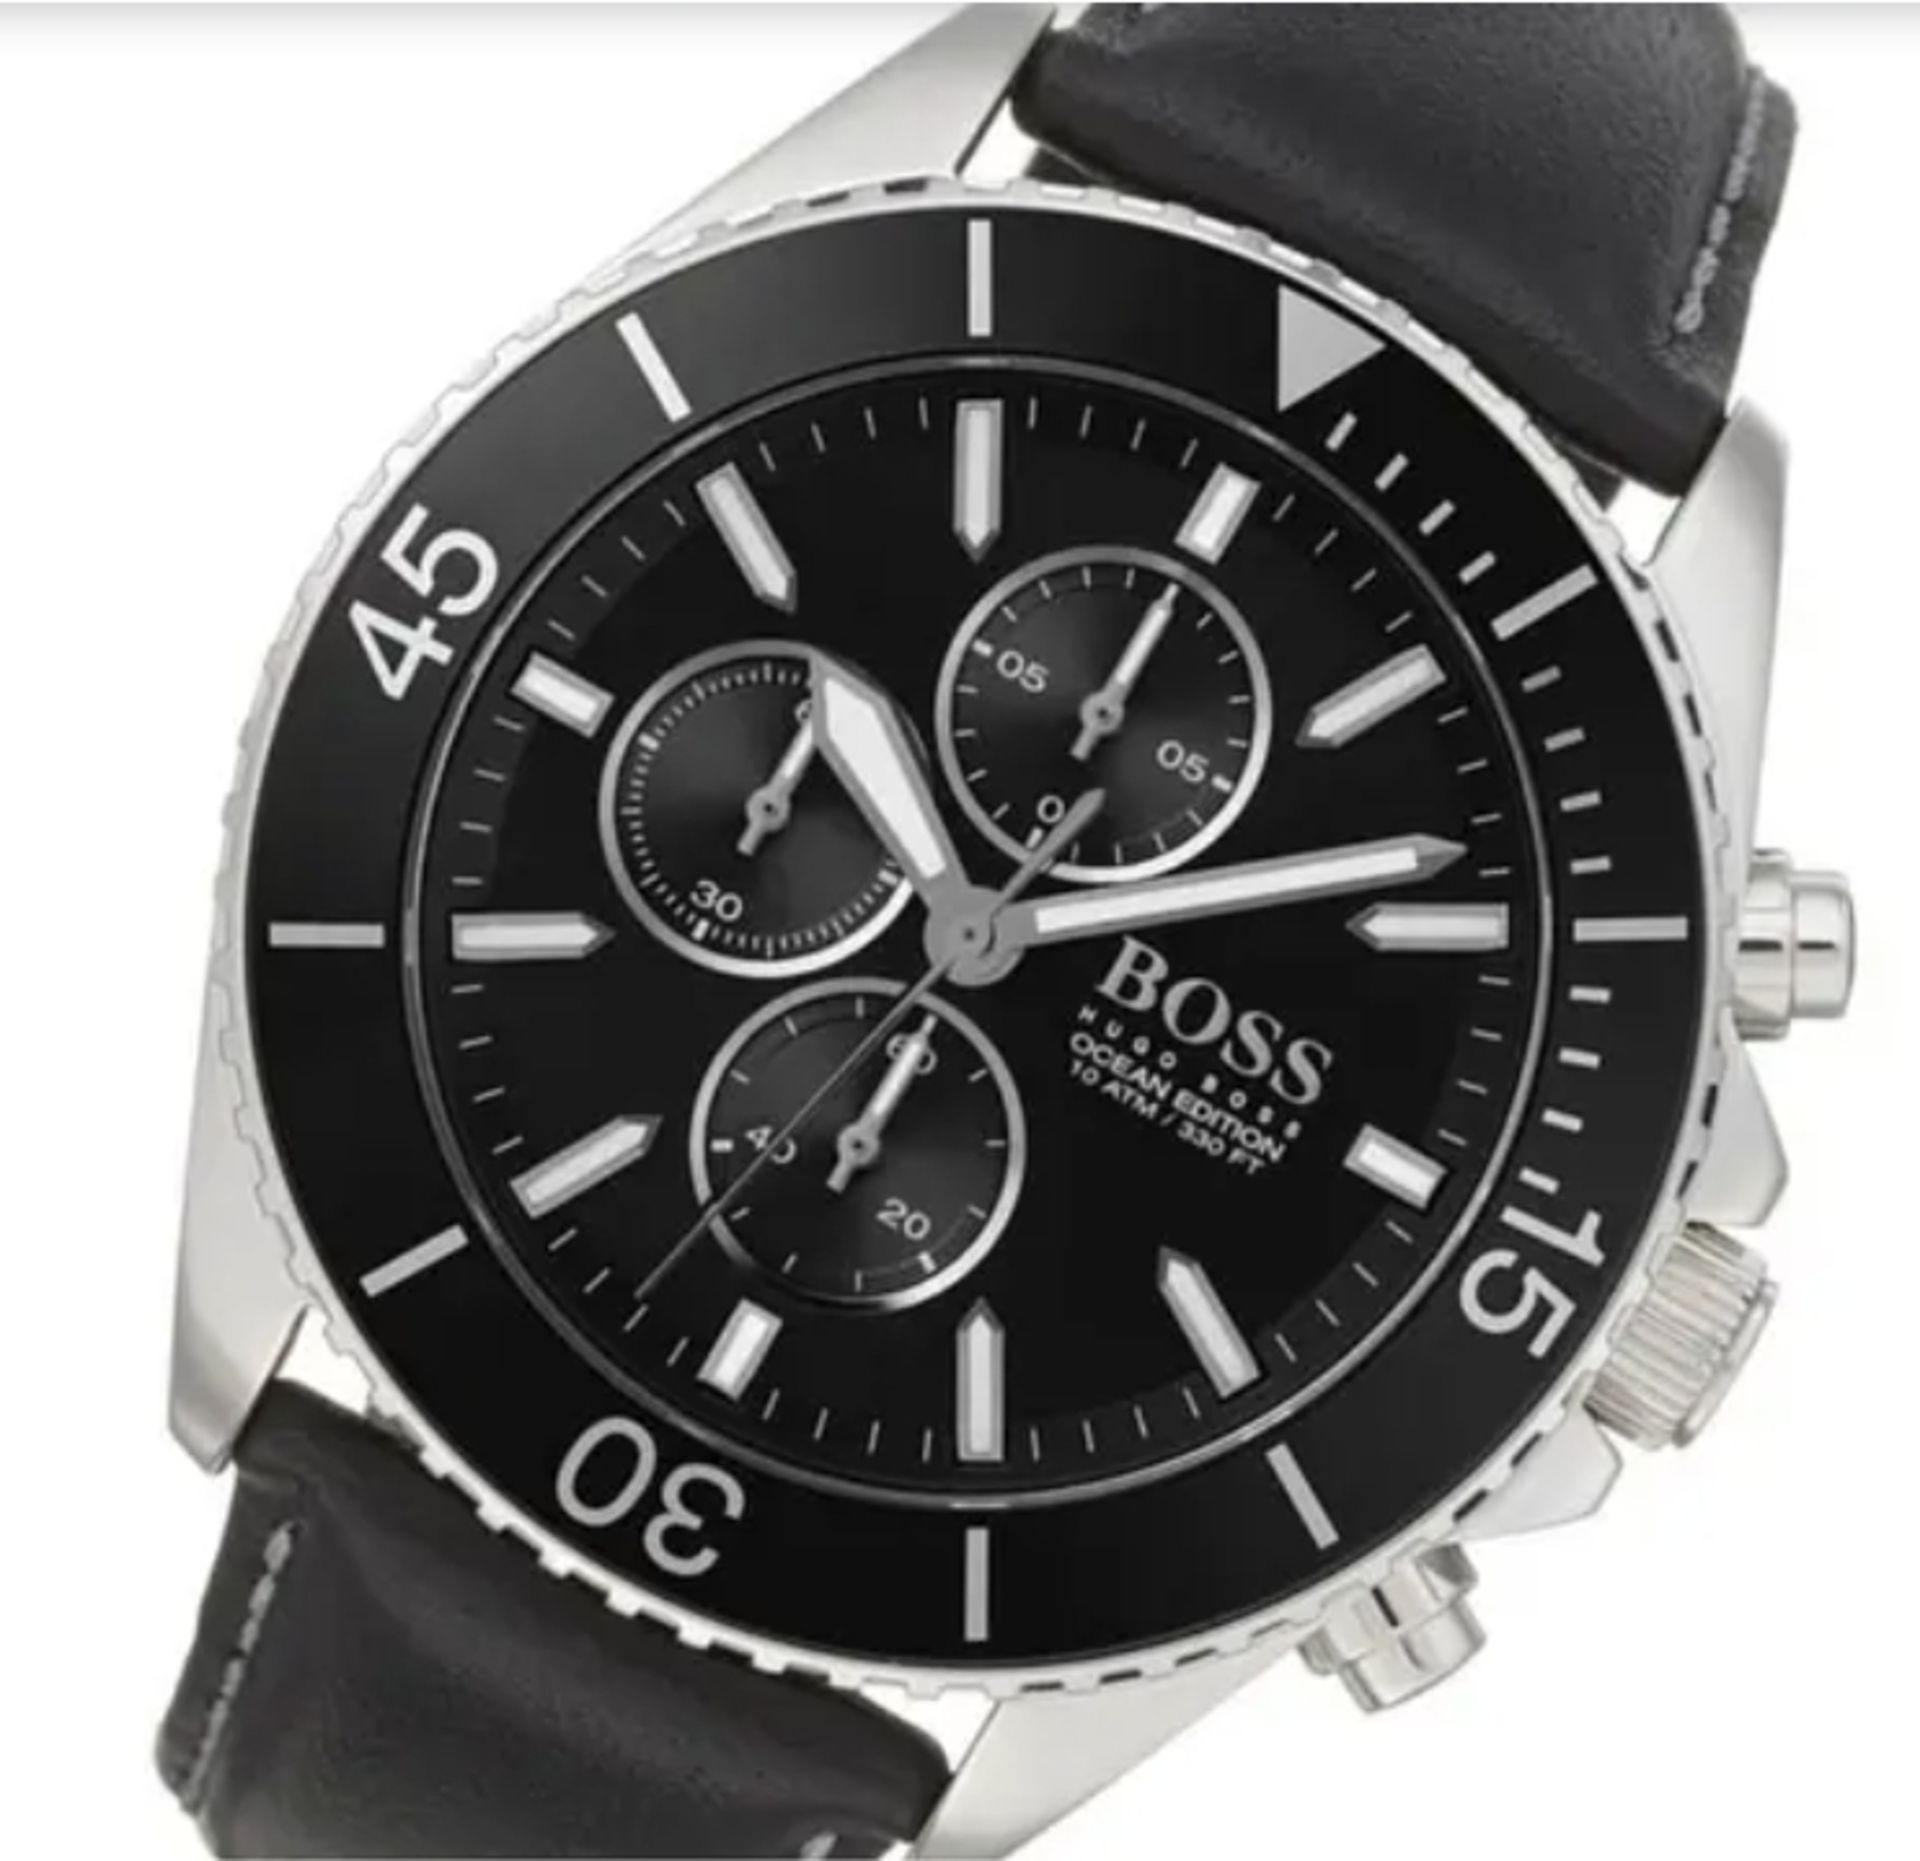 Hugo Boss 1513697 Men's Ocean Edition Black Leather Strap Chronograph Watch - Image 3 of 5